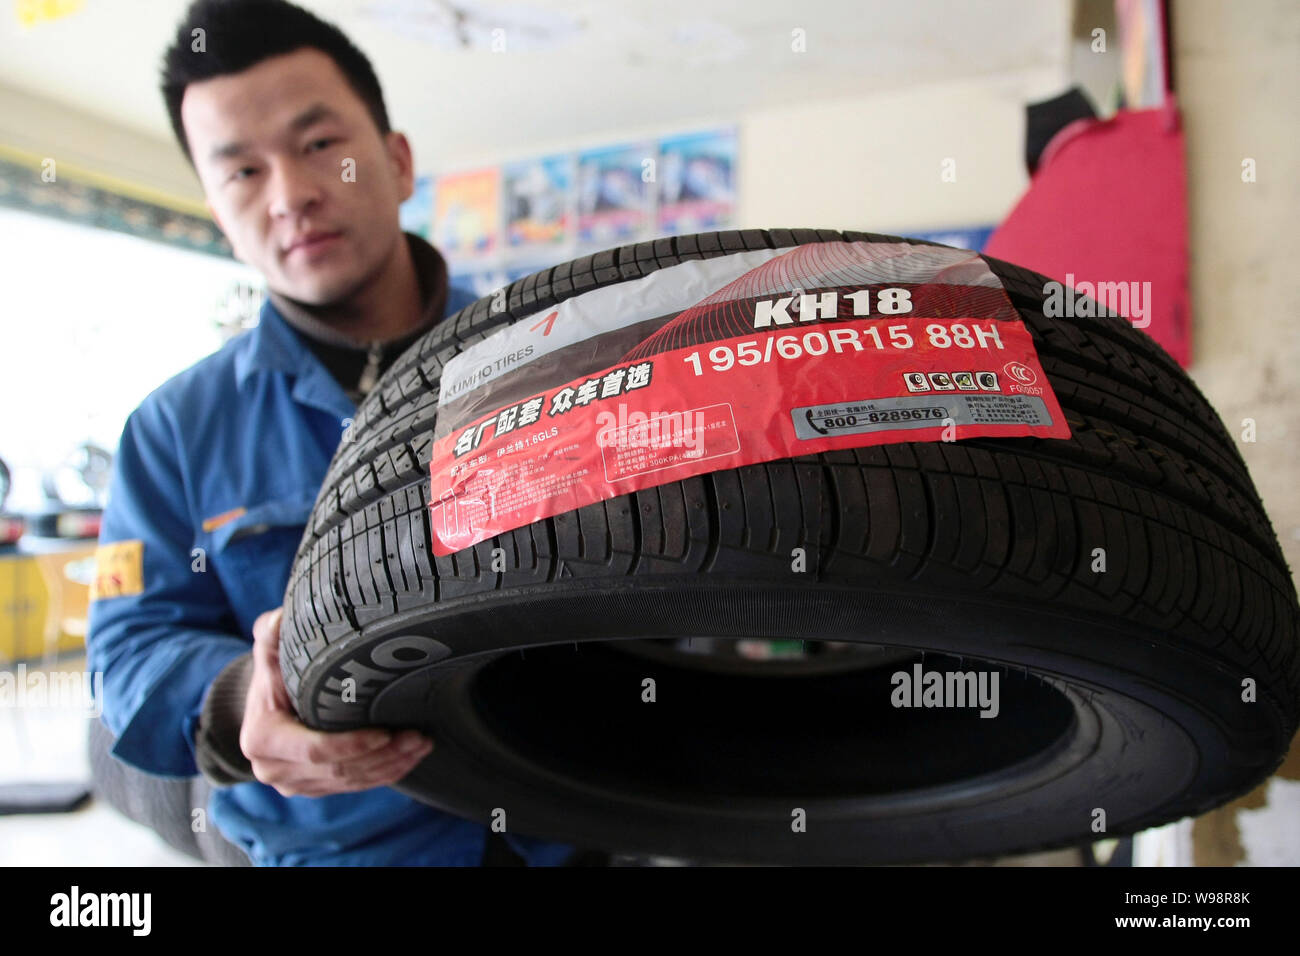 How do you date kumho tires?